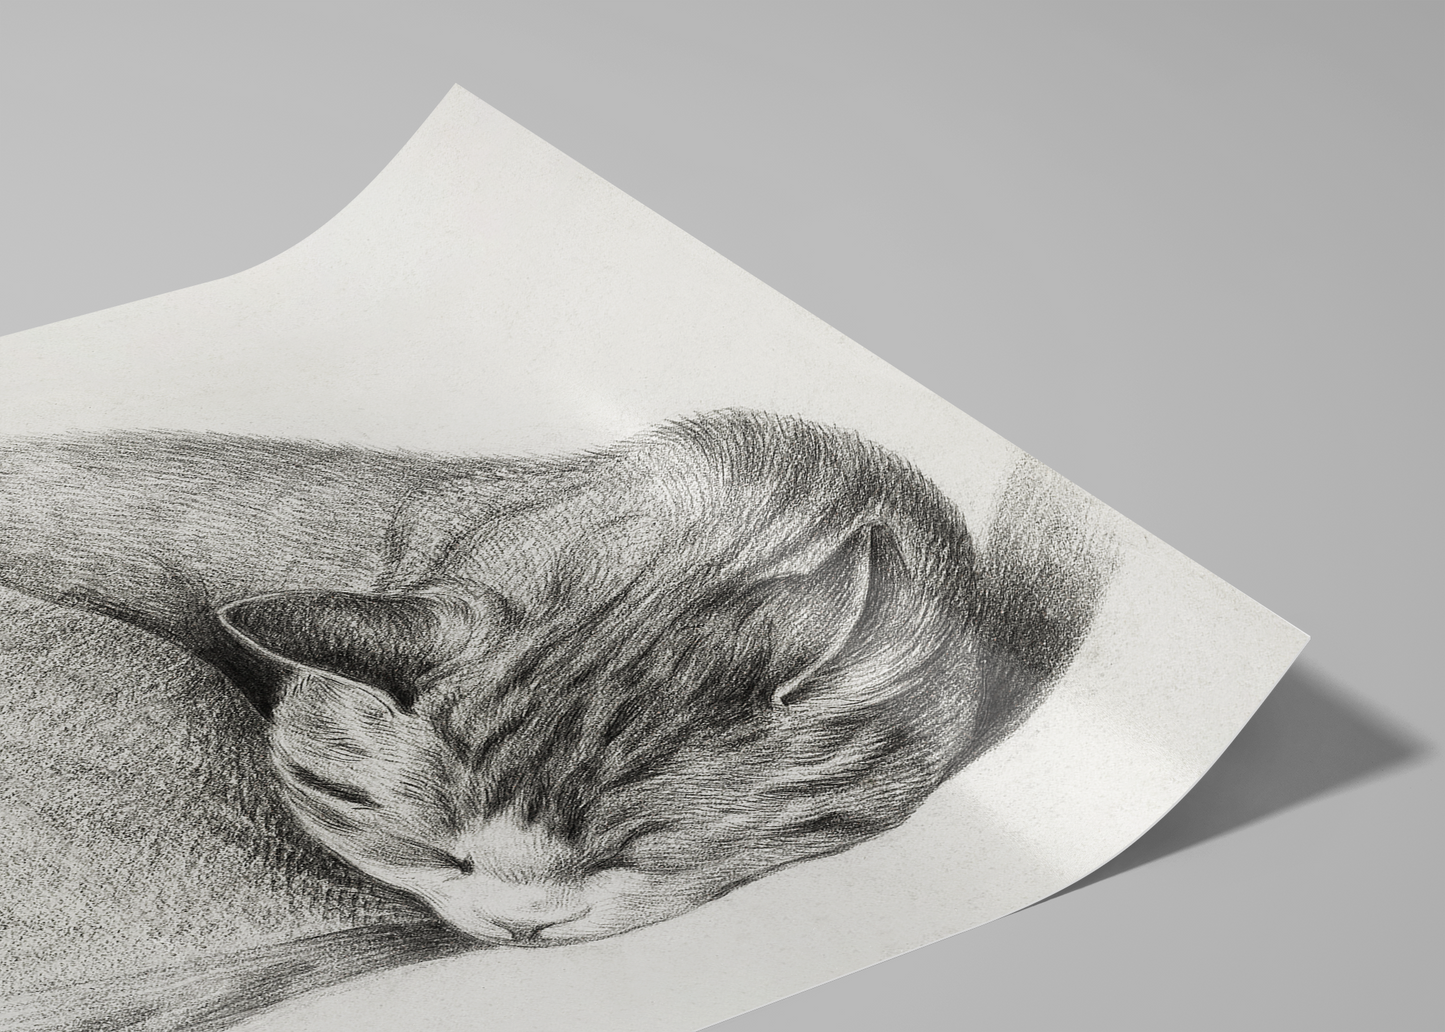 Jean Bernard - Rolled Up Lying Sleeping Cat - Print Your Own Fine Art